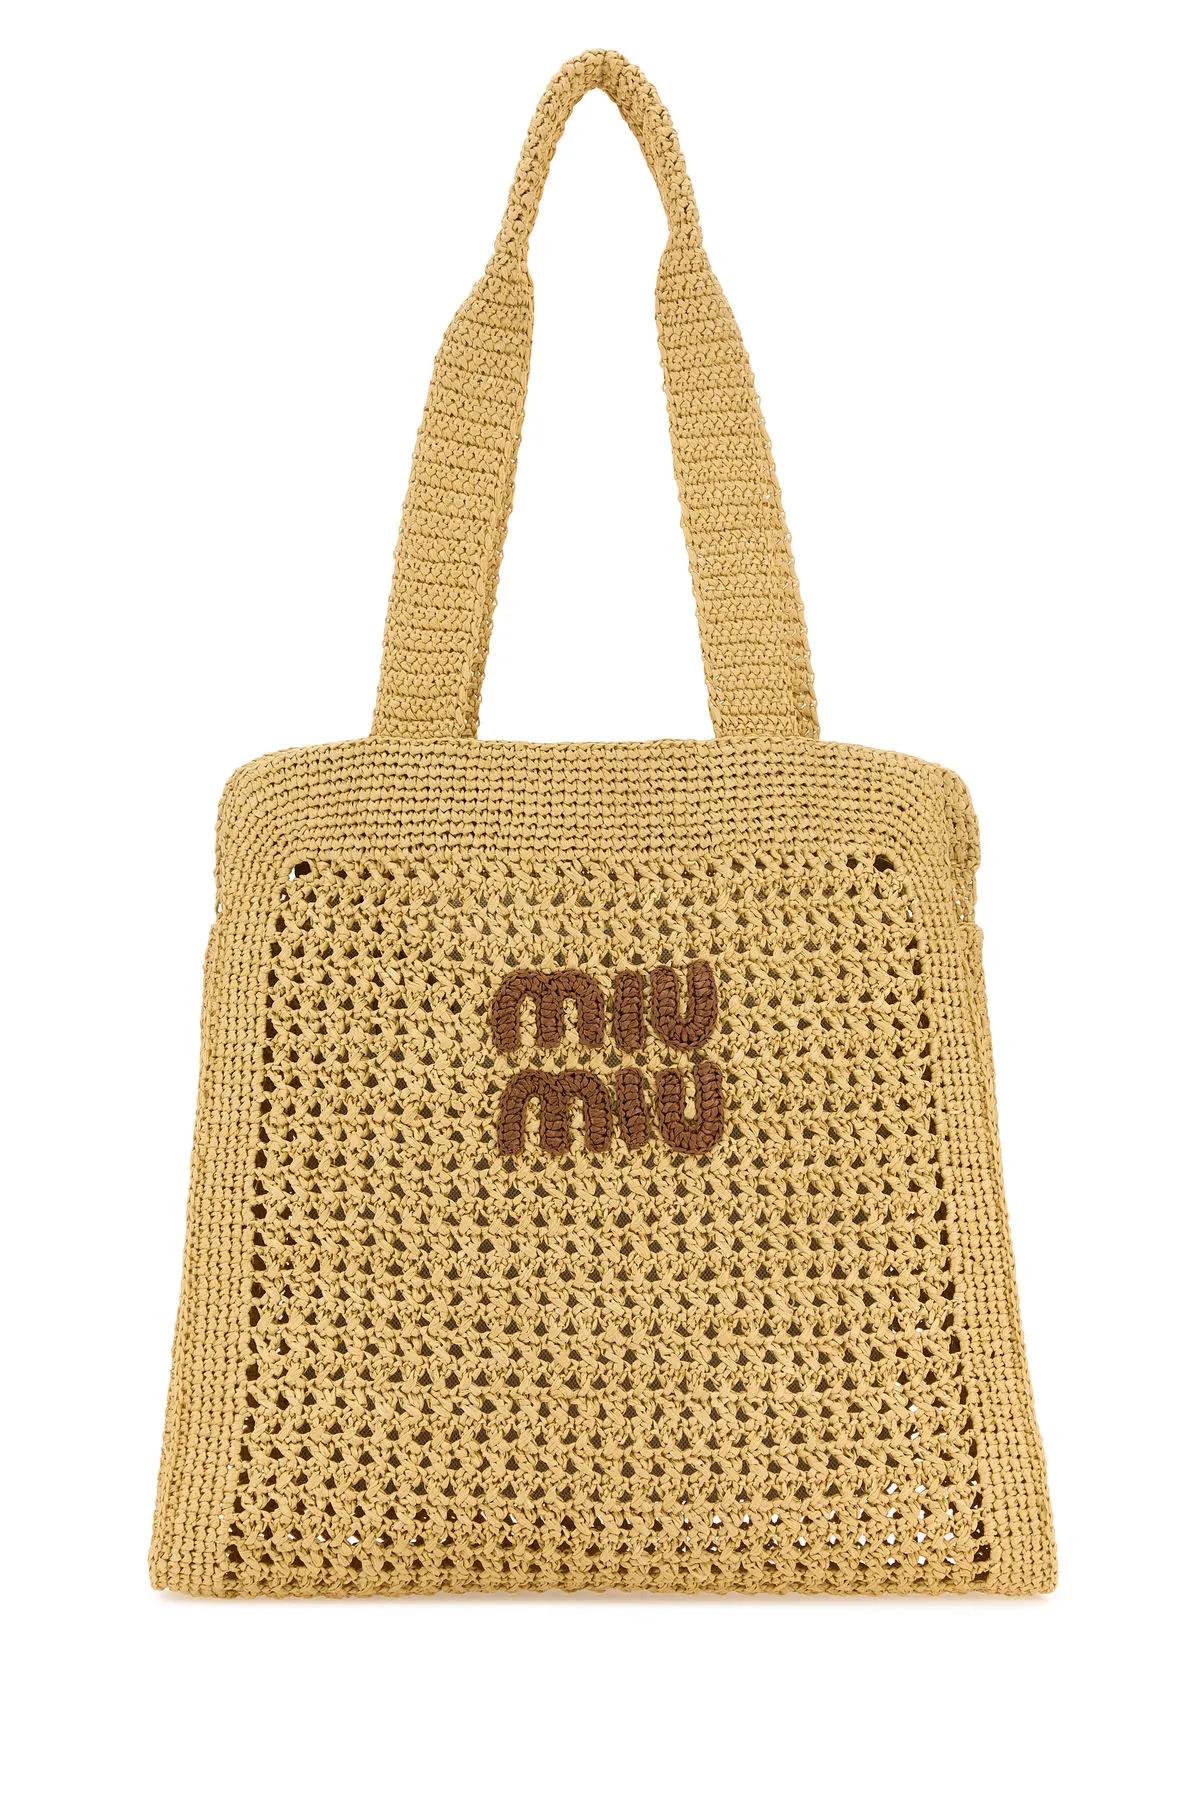 Miu Miu Beige Crochet Shopping Bag In Natural